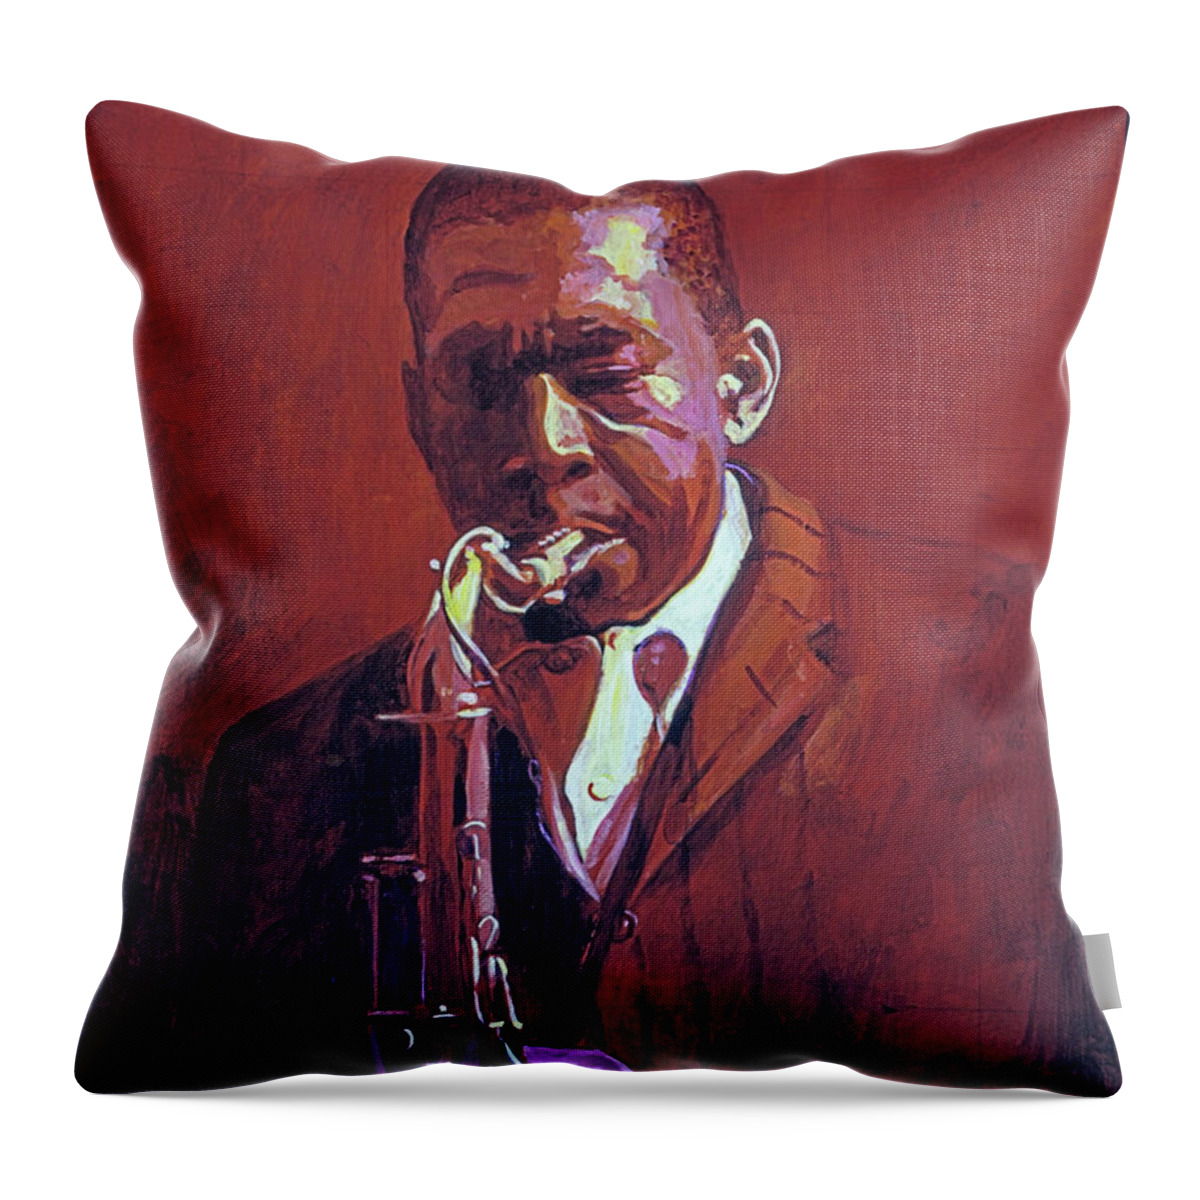 John Coltrane Throw Pillow featuring the painting John Coltrane by David Lloyd Glover